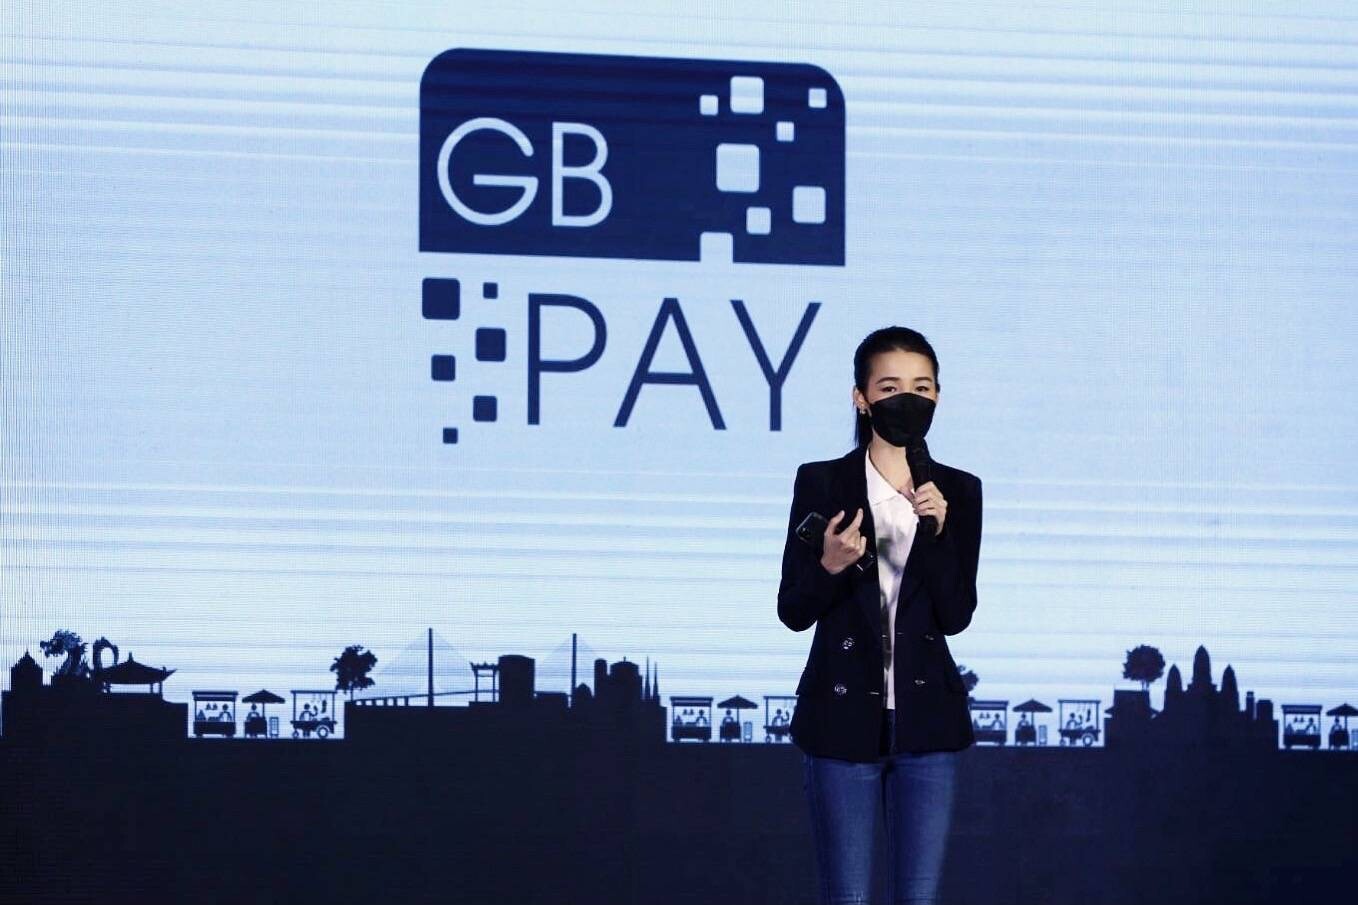 GB Prime Pay เปิดตัวนวัตกรรมทางการเงินรูปแบบใหม่ "GB Tap to pay" แค่แตะมือถือก็จ่ายเงินได้เลย สะดวก ปลอดภัย ลดการสัมผัสในยุคโควิด-19